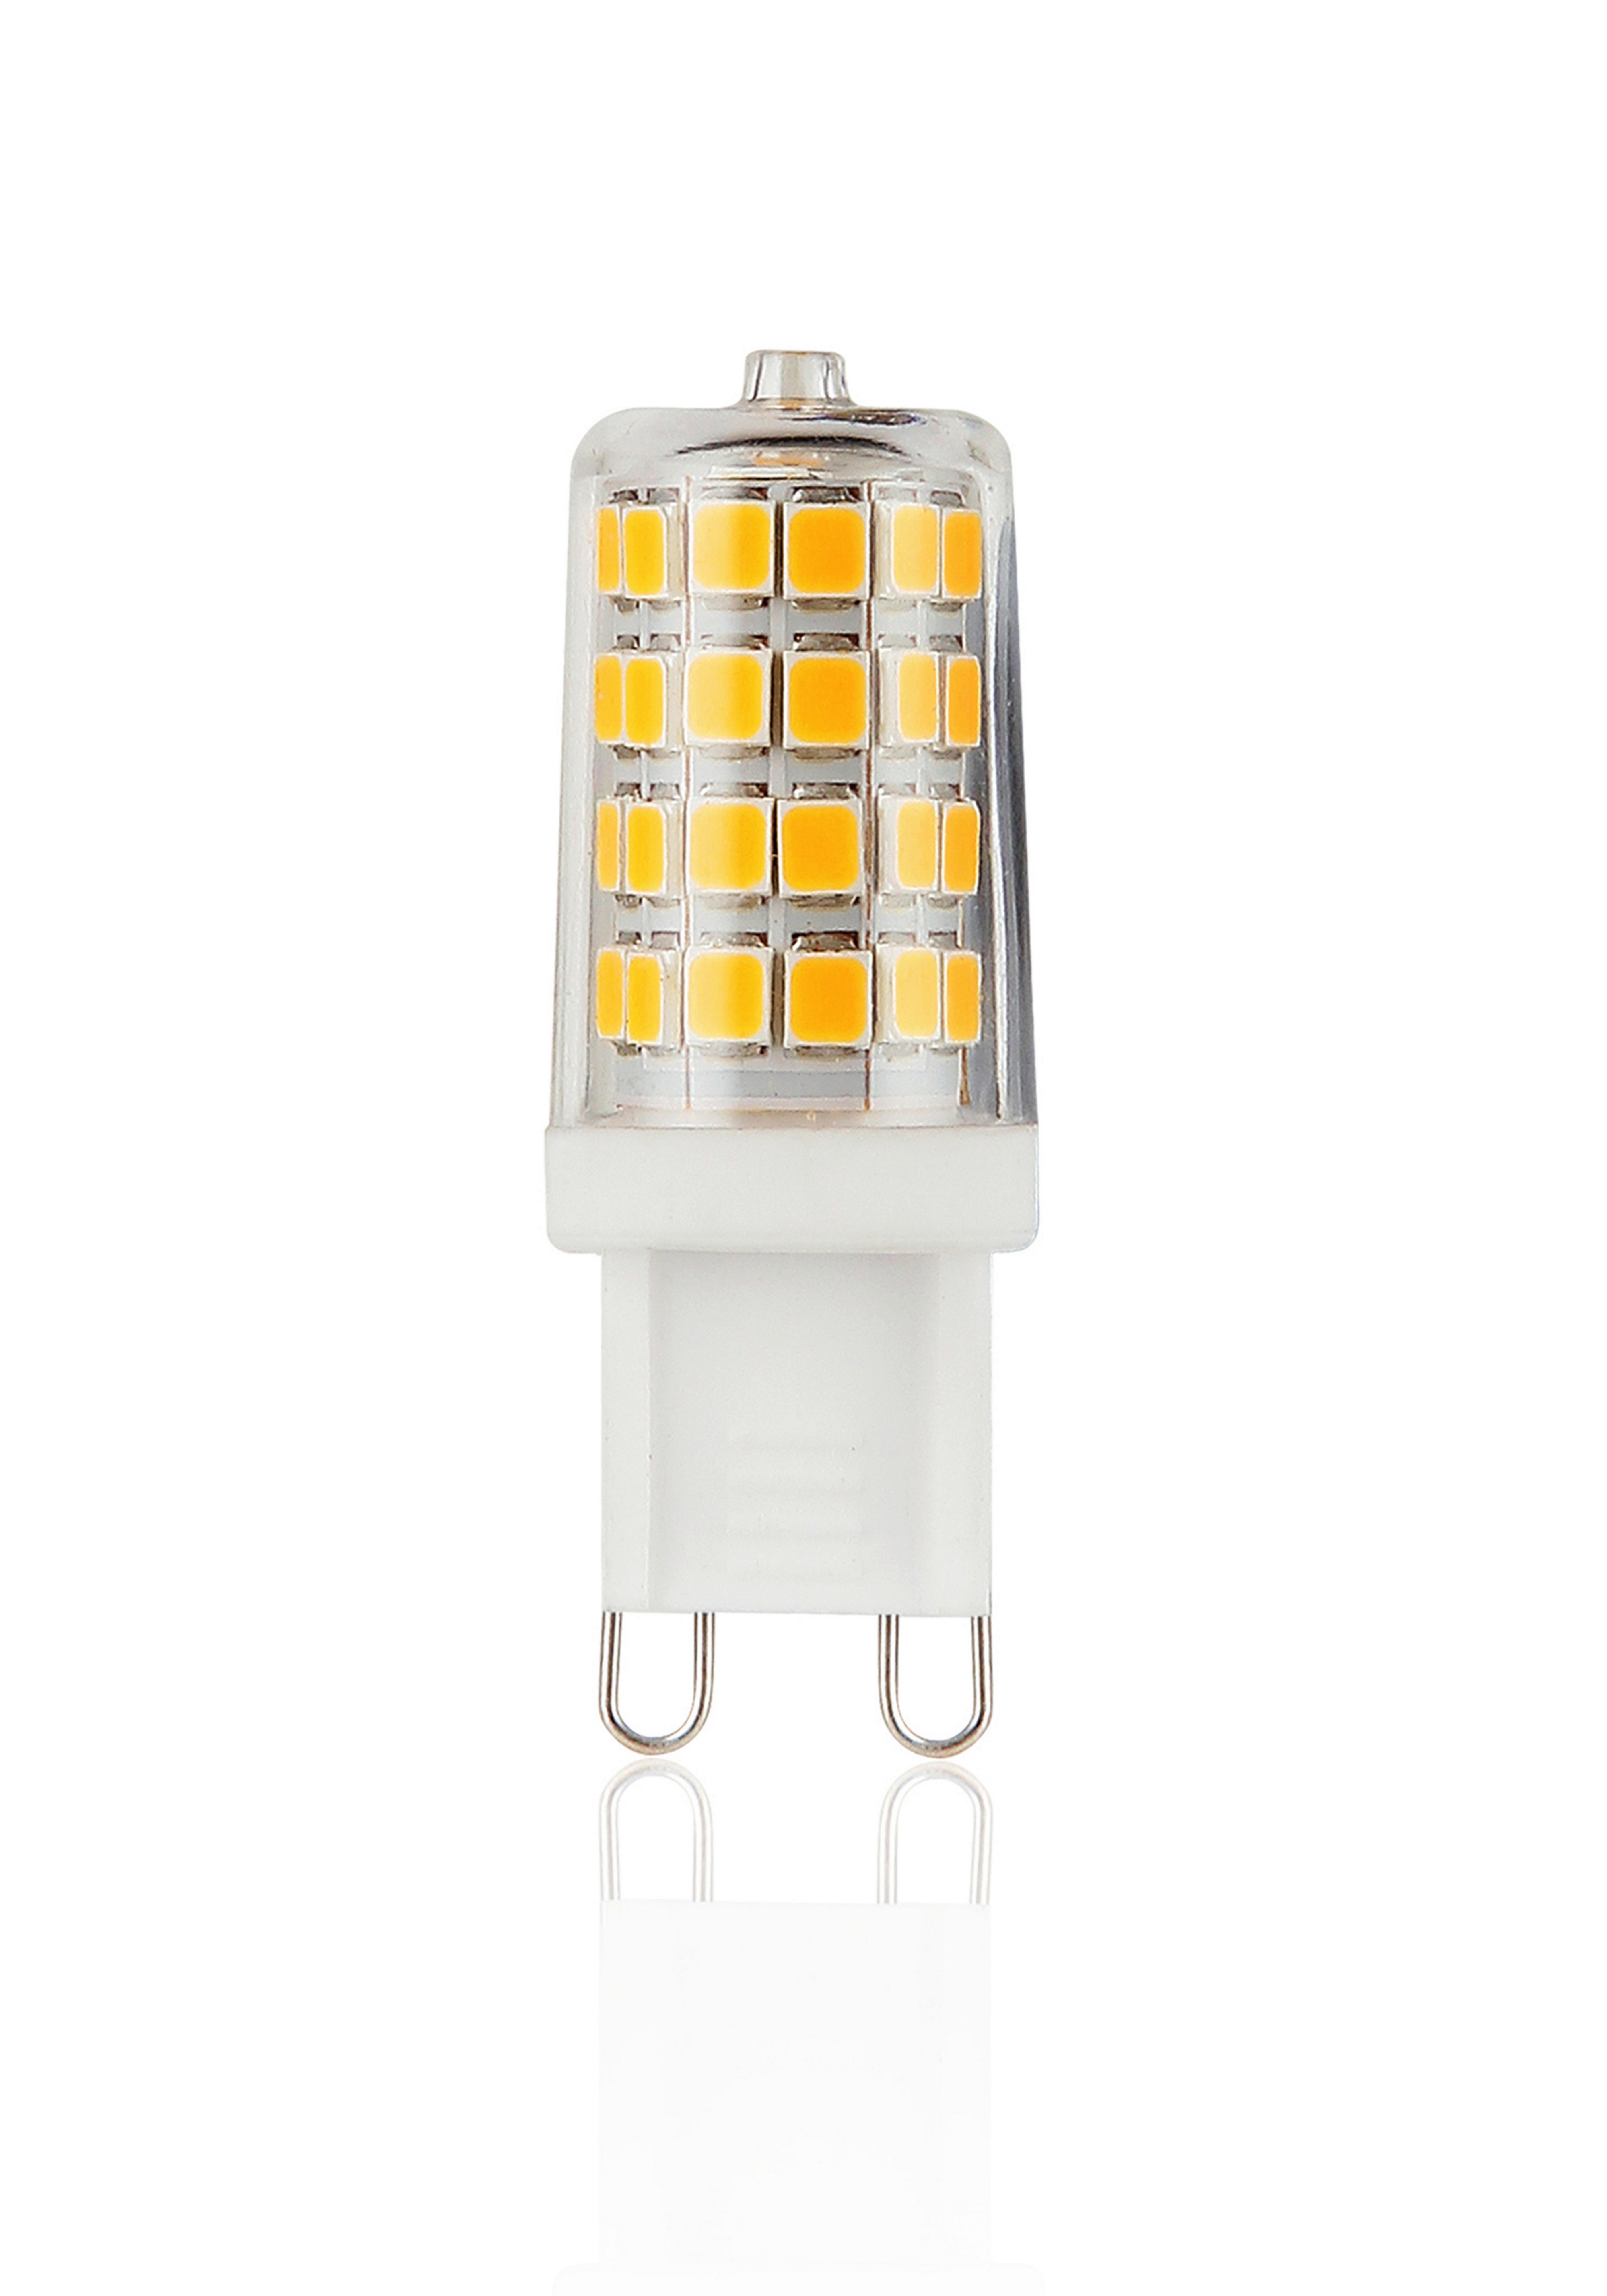 LED-Leuchtmittel 10676DC max. 4 Watt - Klar, Kunststoff (1,6/4,9cm) - Modern Living